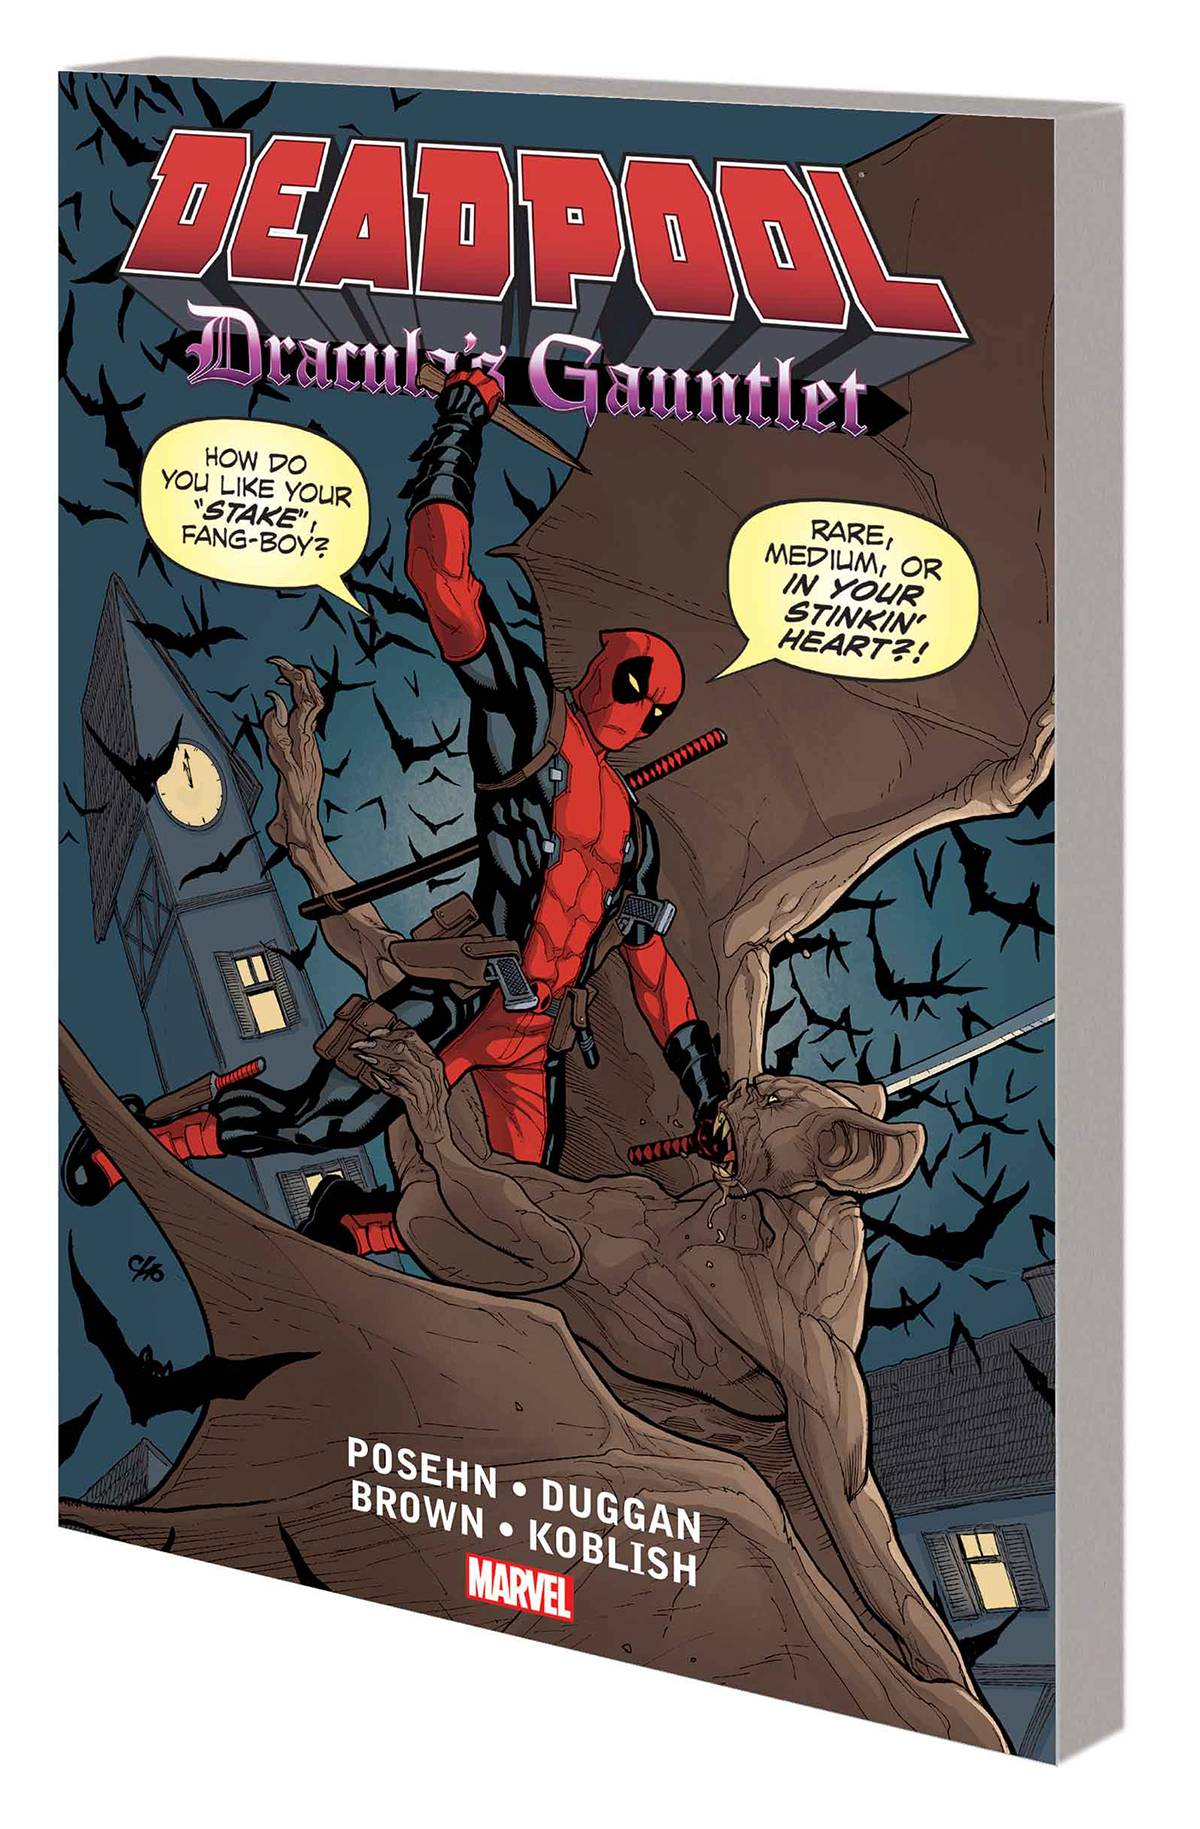 Deadpool Draculas Gauntlet Graphic Novel